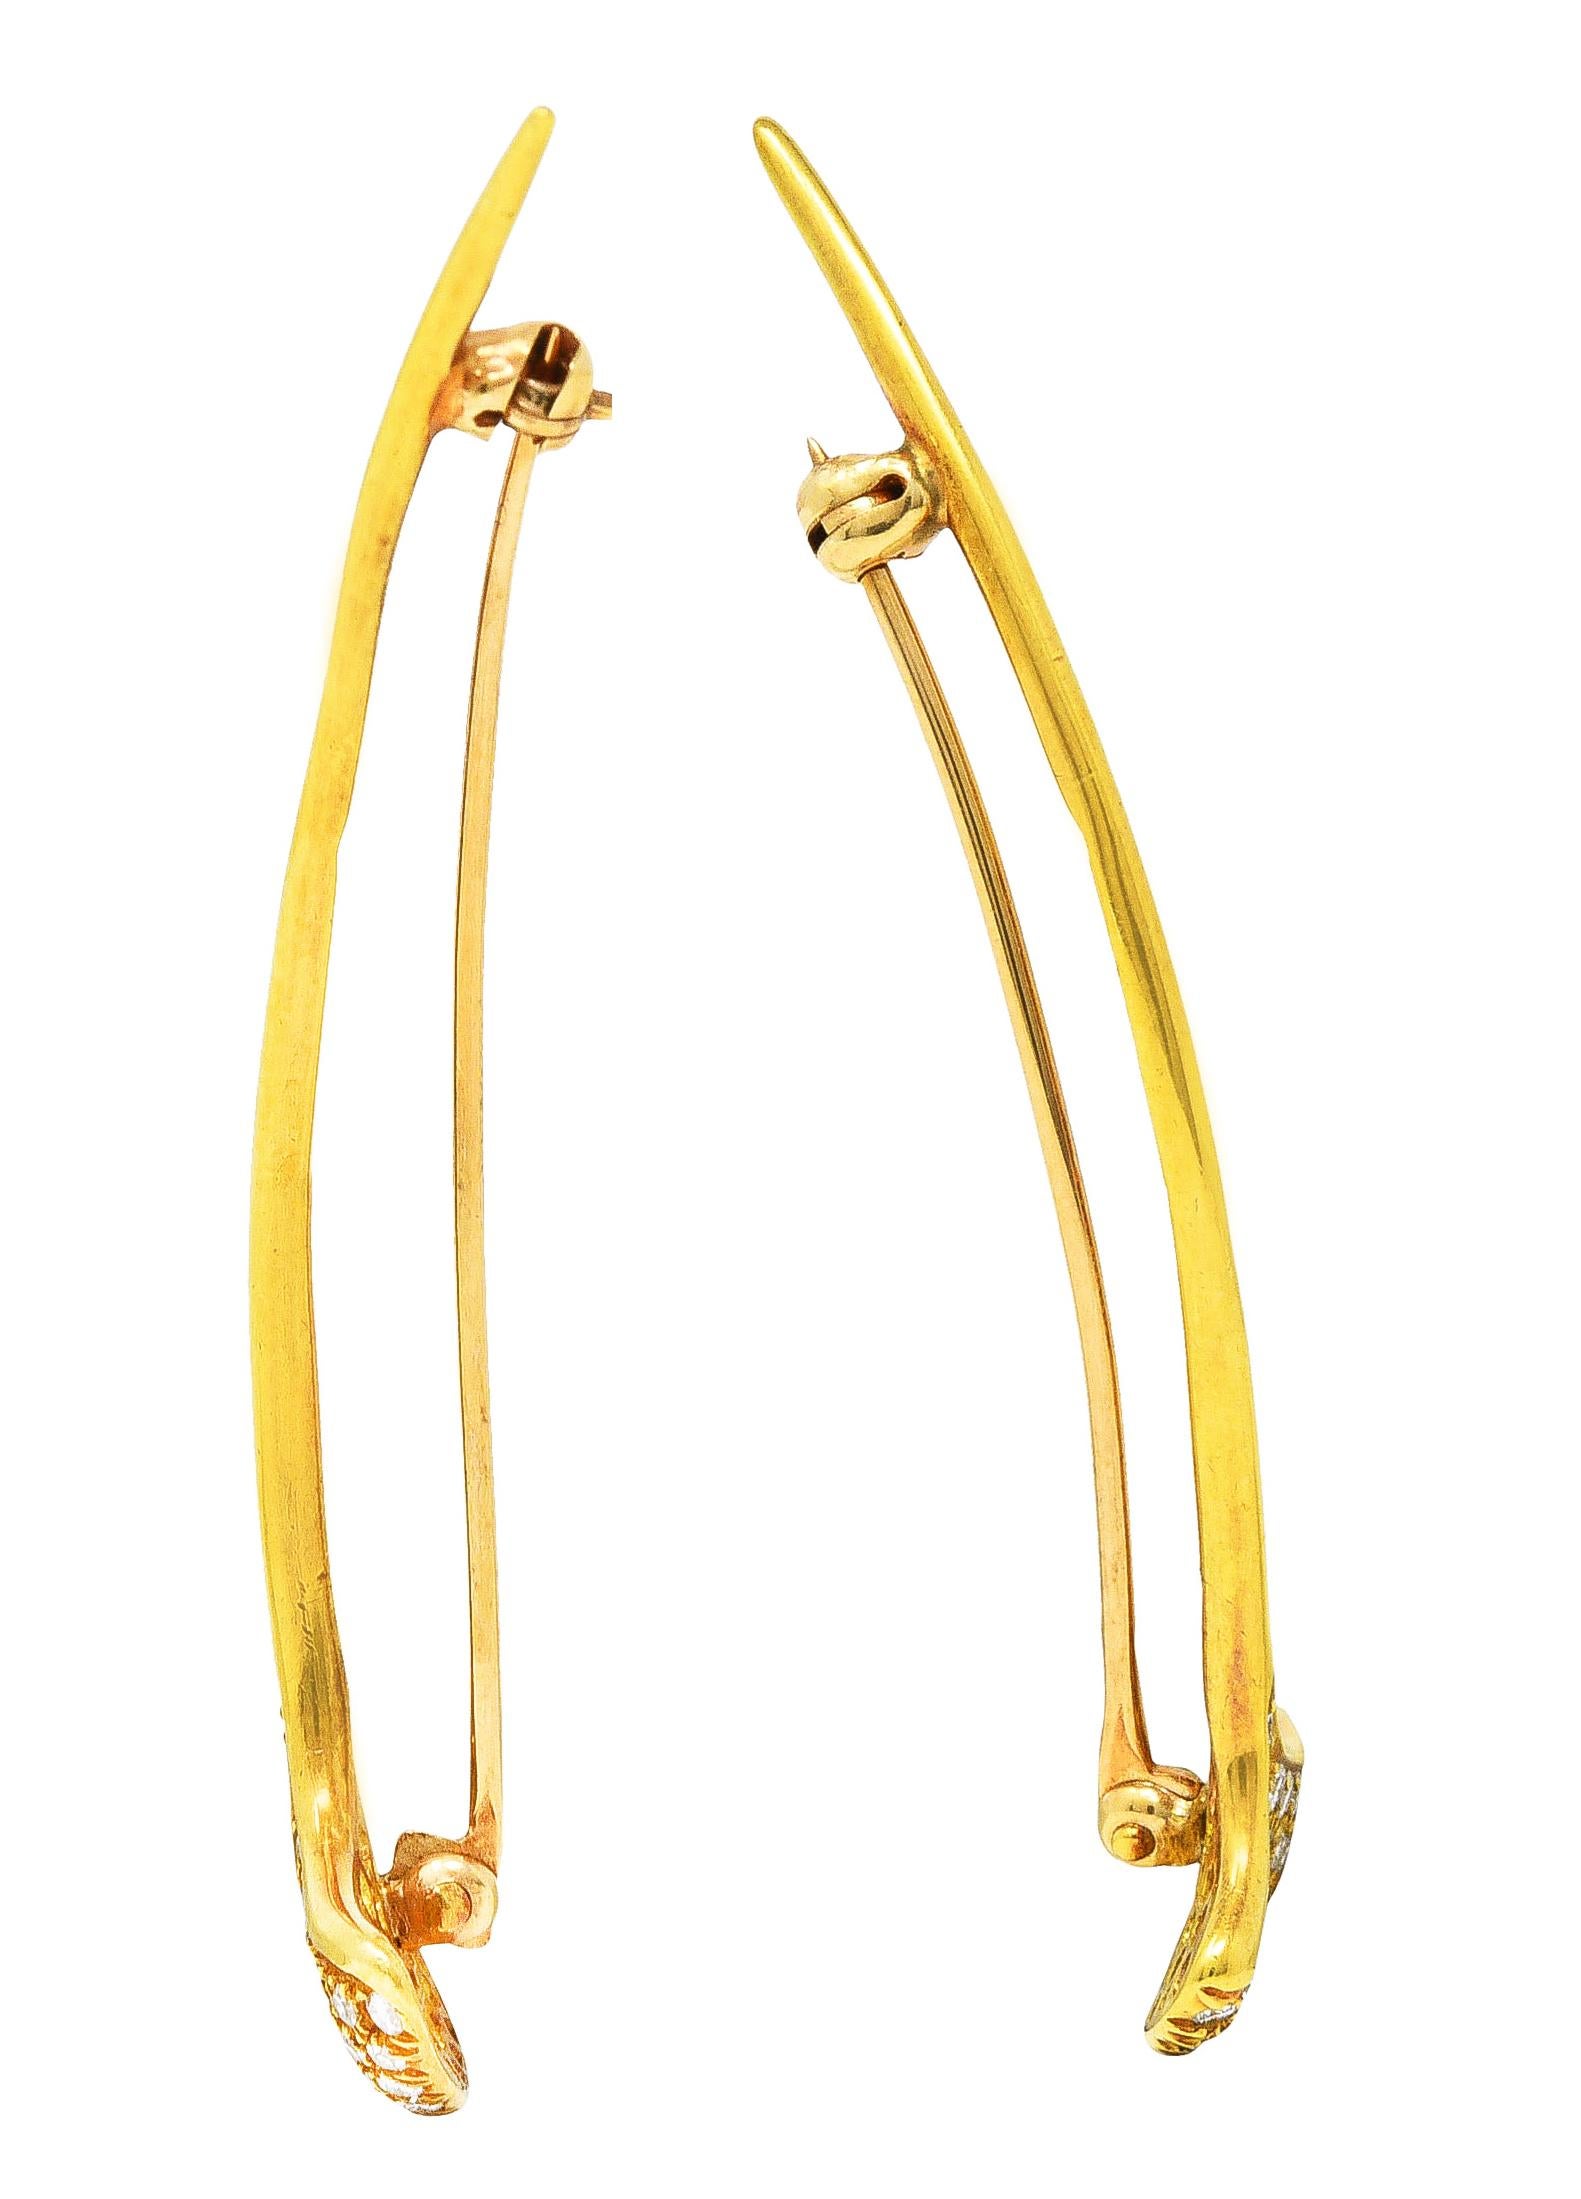 Contemporary Angela Cummings Tiffany & Co. Pave Diamond 18 Karat Yellow Gold Ginkgo Brooches